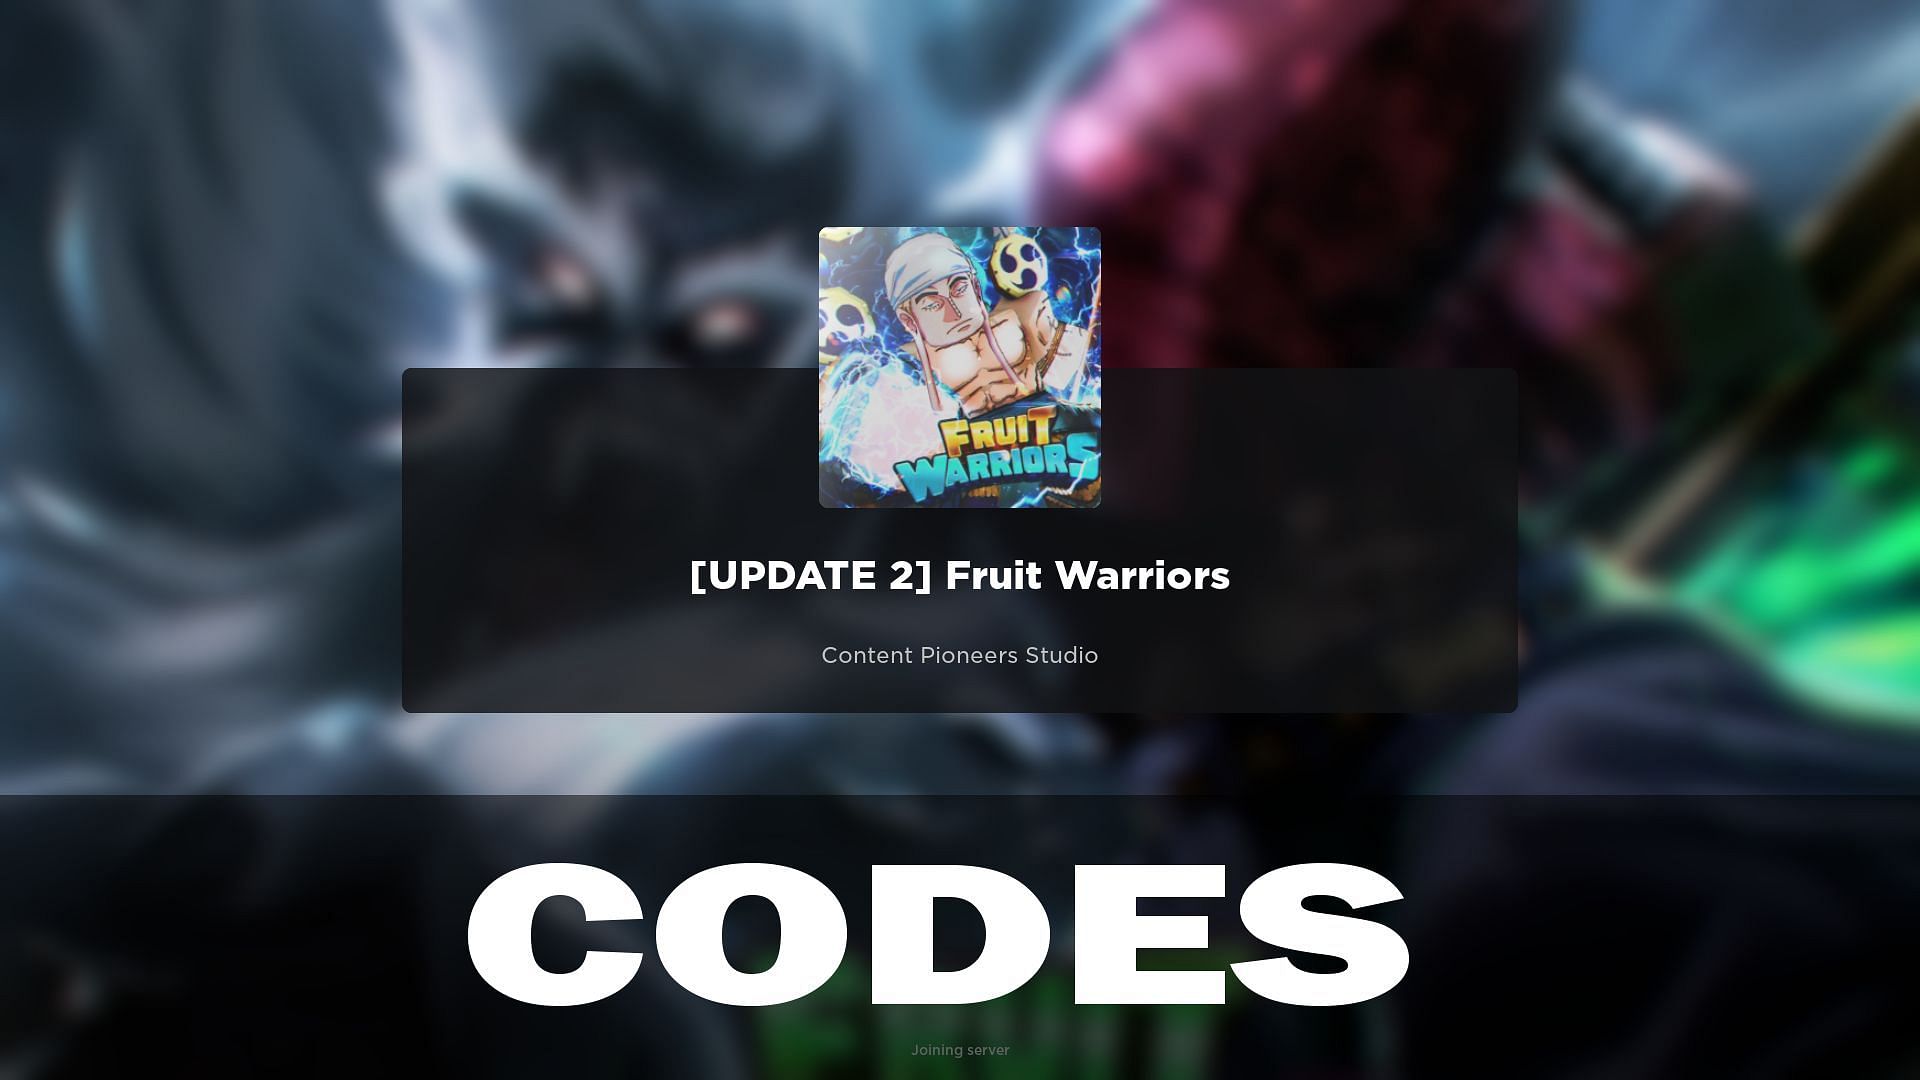 Fruit Warriors codes